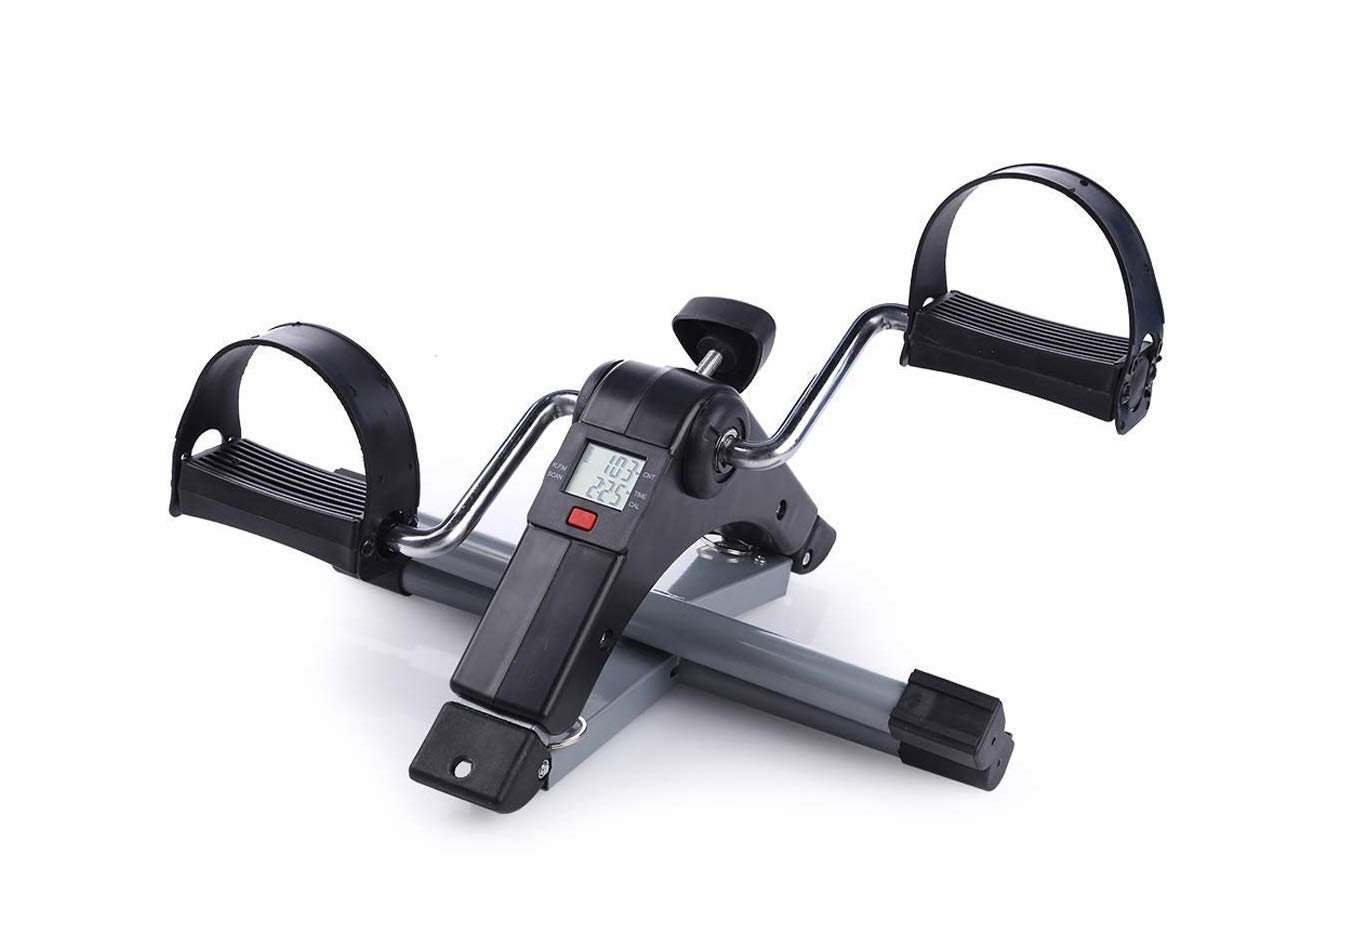 folding exercise bikes - Healthex Digital Pedal Exerciser LCD Counter Exercise Bike